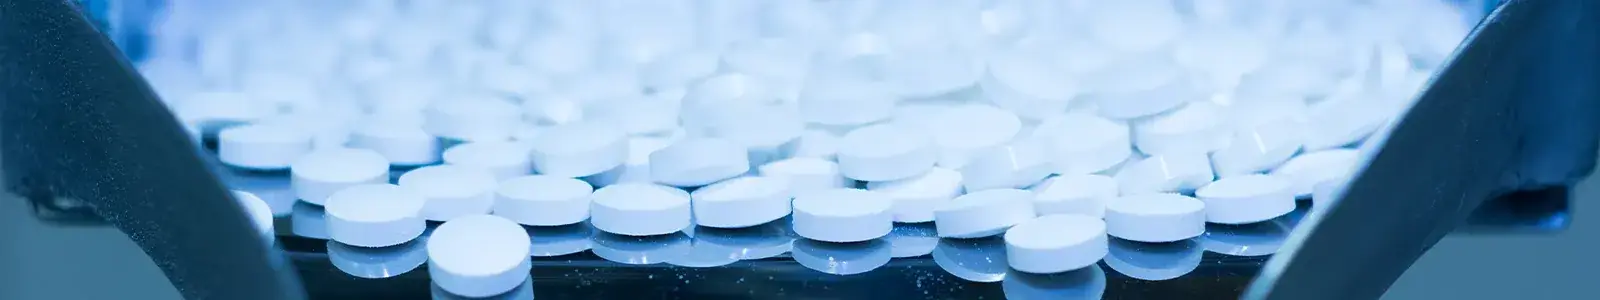 Industries-pharma-pills-1600x300px (1)